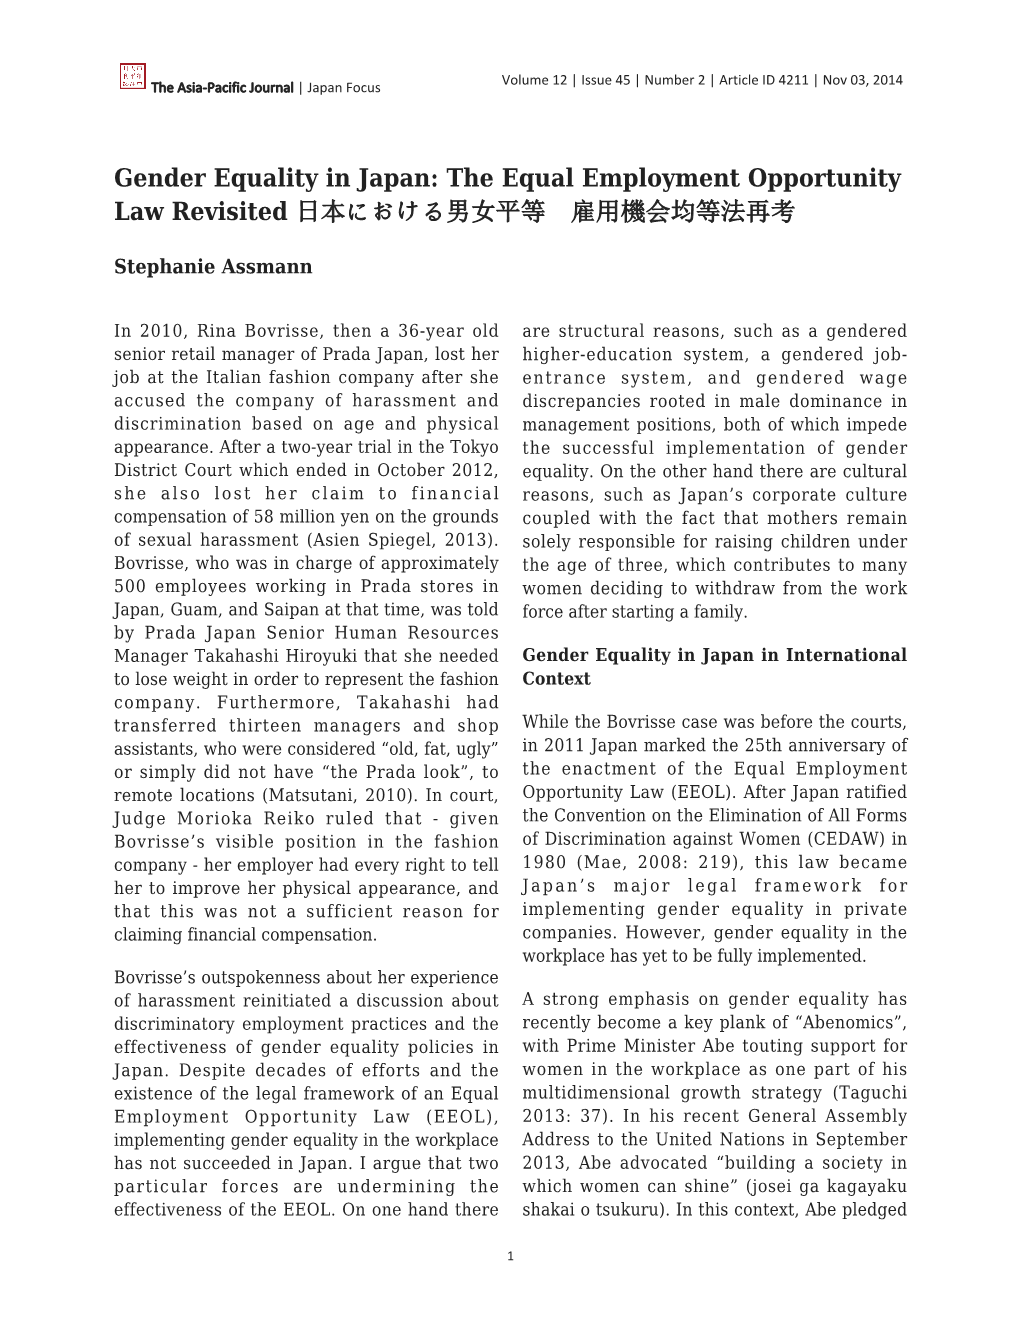 Gender Equality in Japan: the Equal Employment Opportunity Law Revisited 日本における男女平等 雇用機会均等法再考